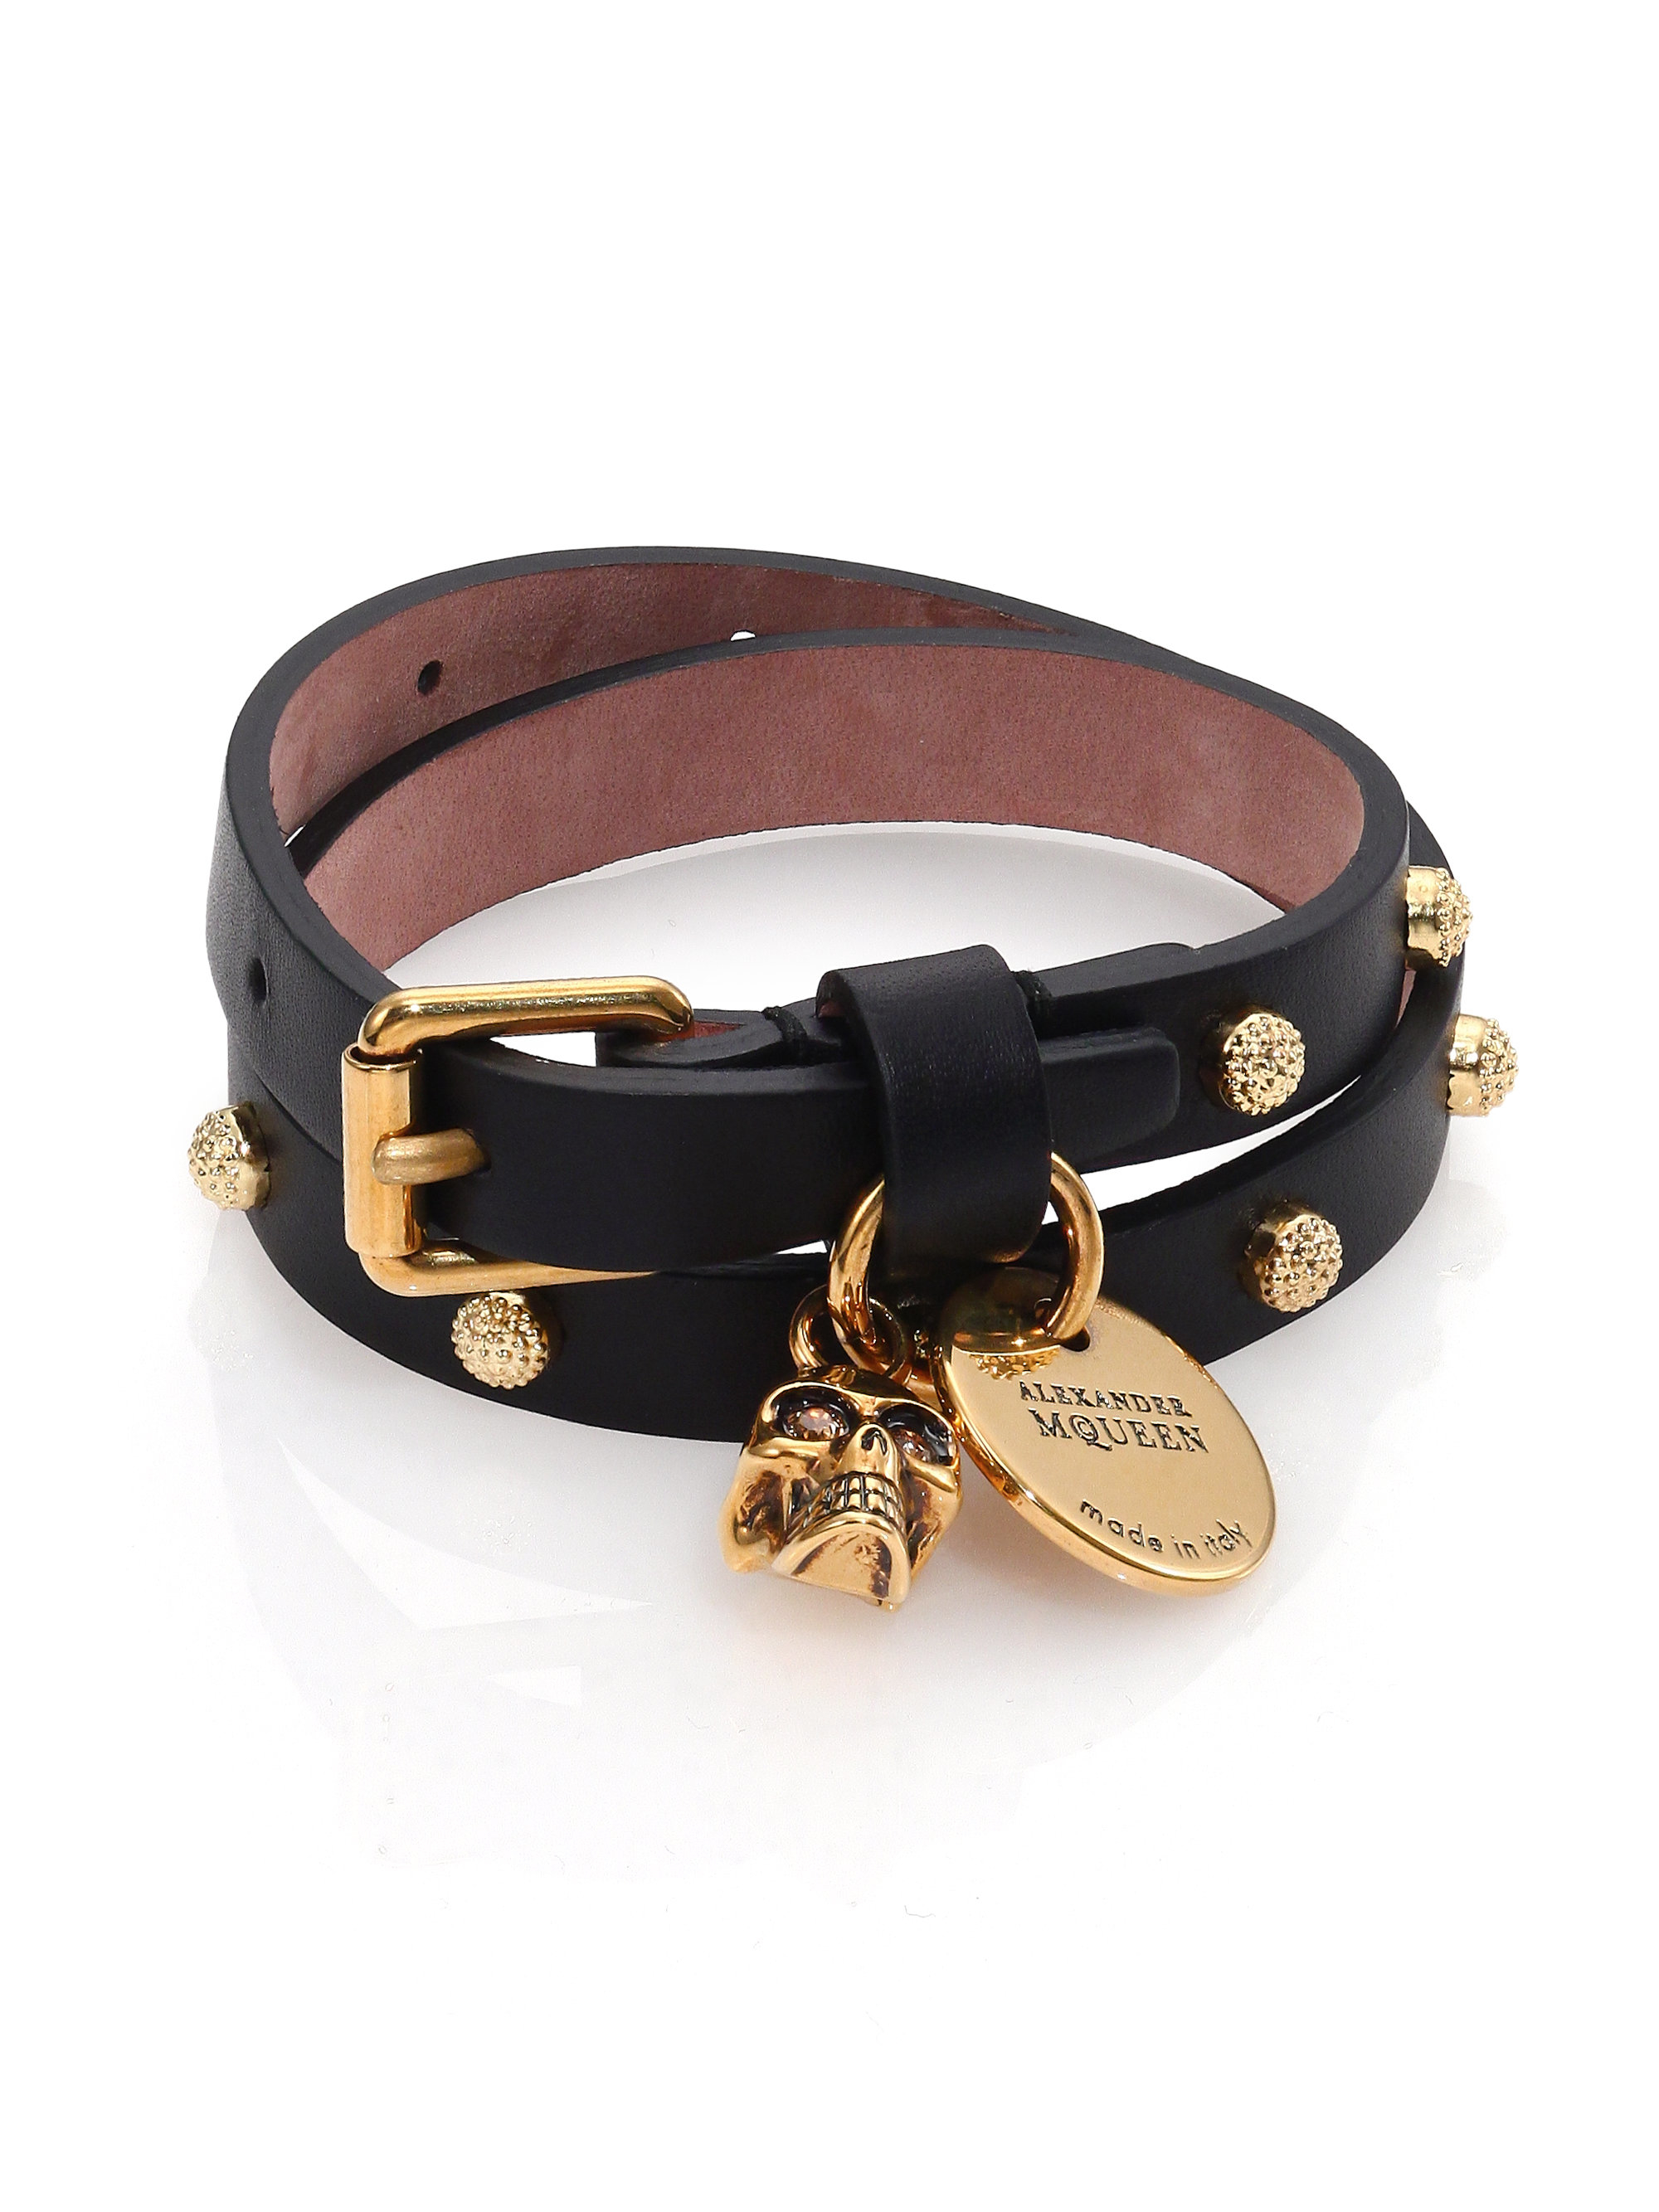 Lyst - Alexander Mcqueen Studded Leather Skull Wrap Bracelet in Black